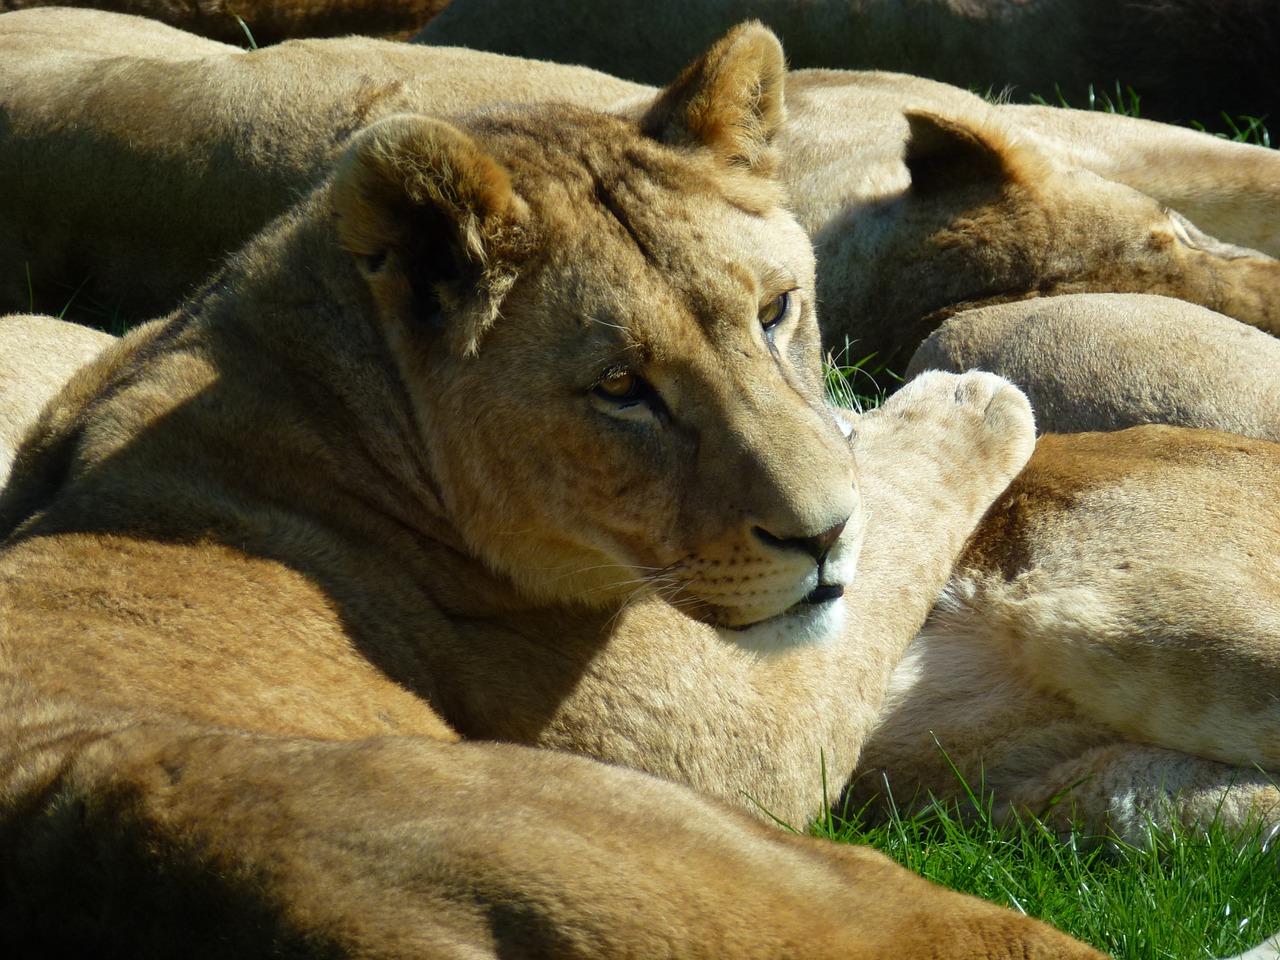 Lions at Longleat Safari Park